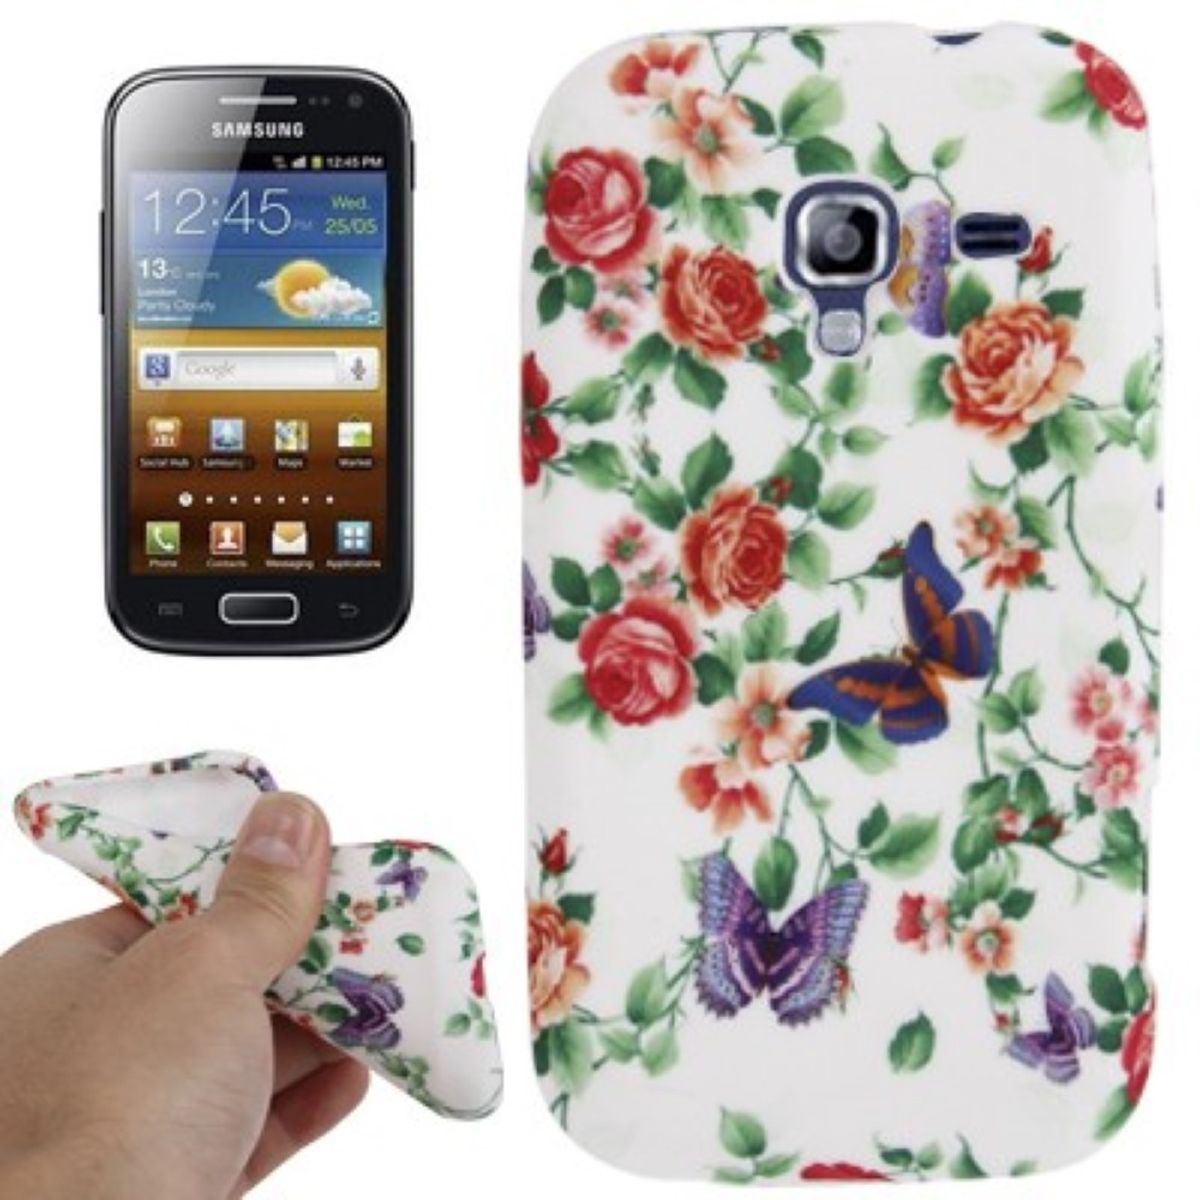 Funda protectora de TPU para teléfono móvil Samsung Galaxy Ace 2 i8160 rosas